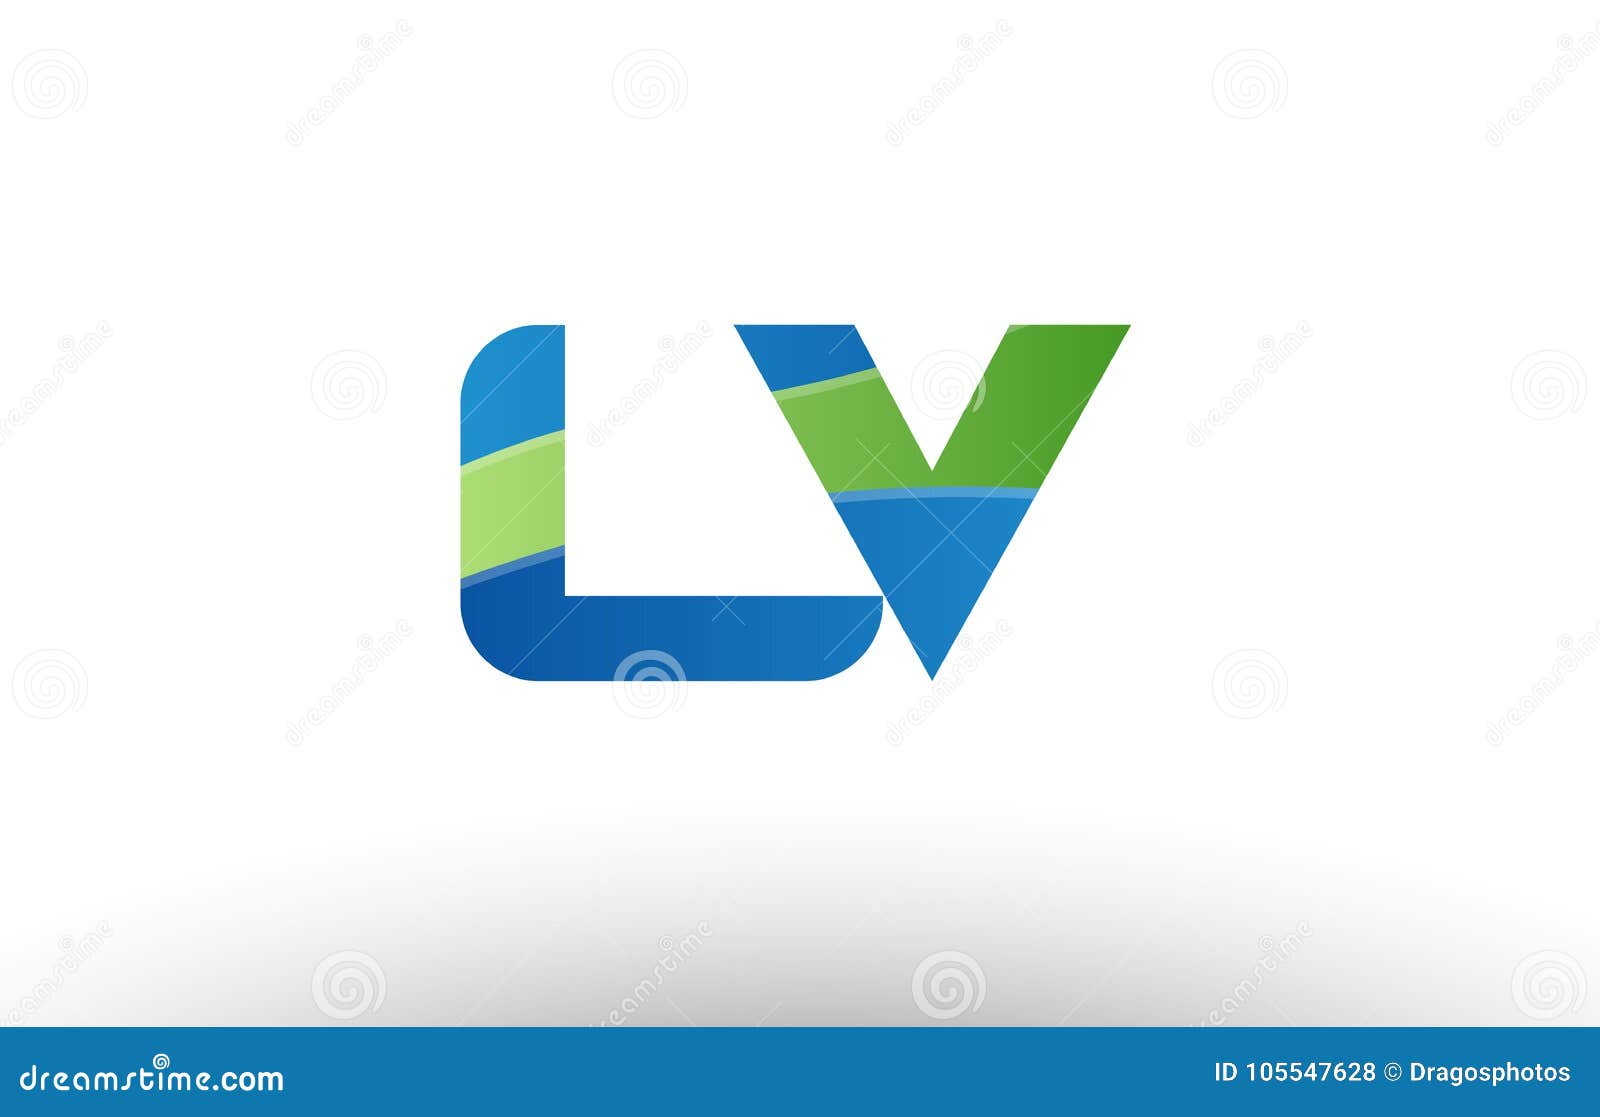 lv logo blue